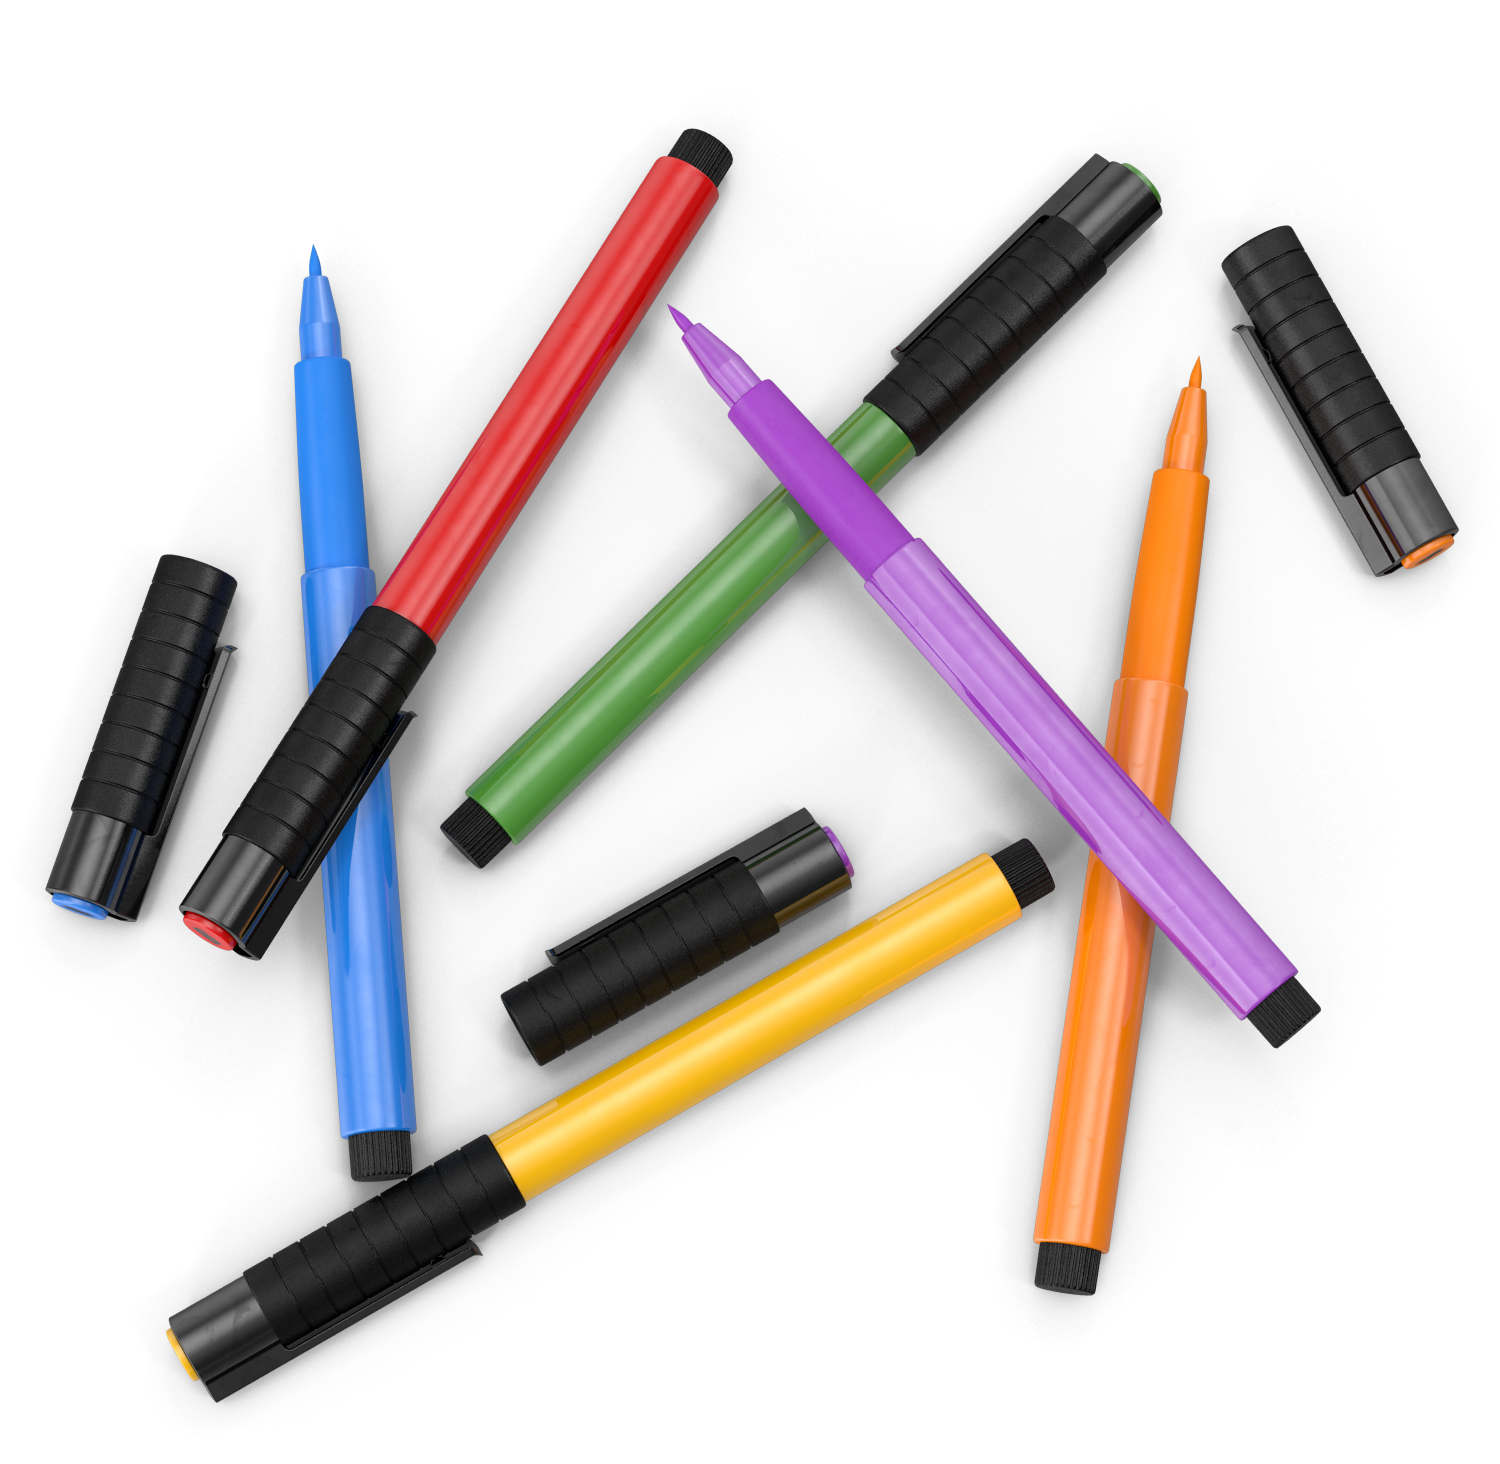 Pen pencil book. Ручки и карандаши. Карандаши ручки маркеры. Ручка карандаш. Ручки карандаши фломастеры.